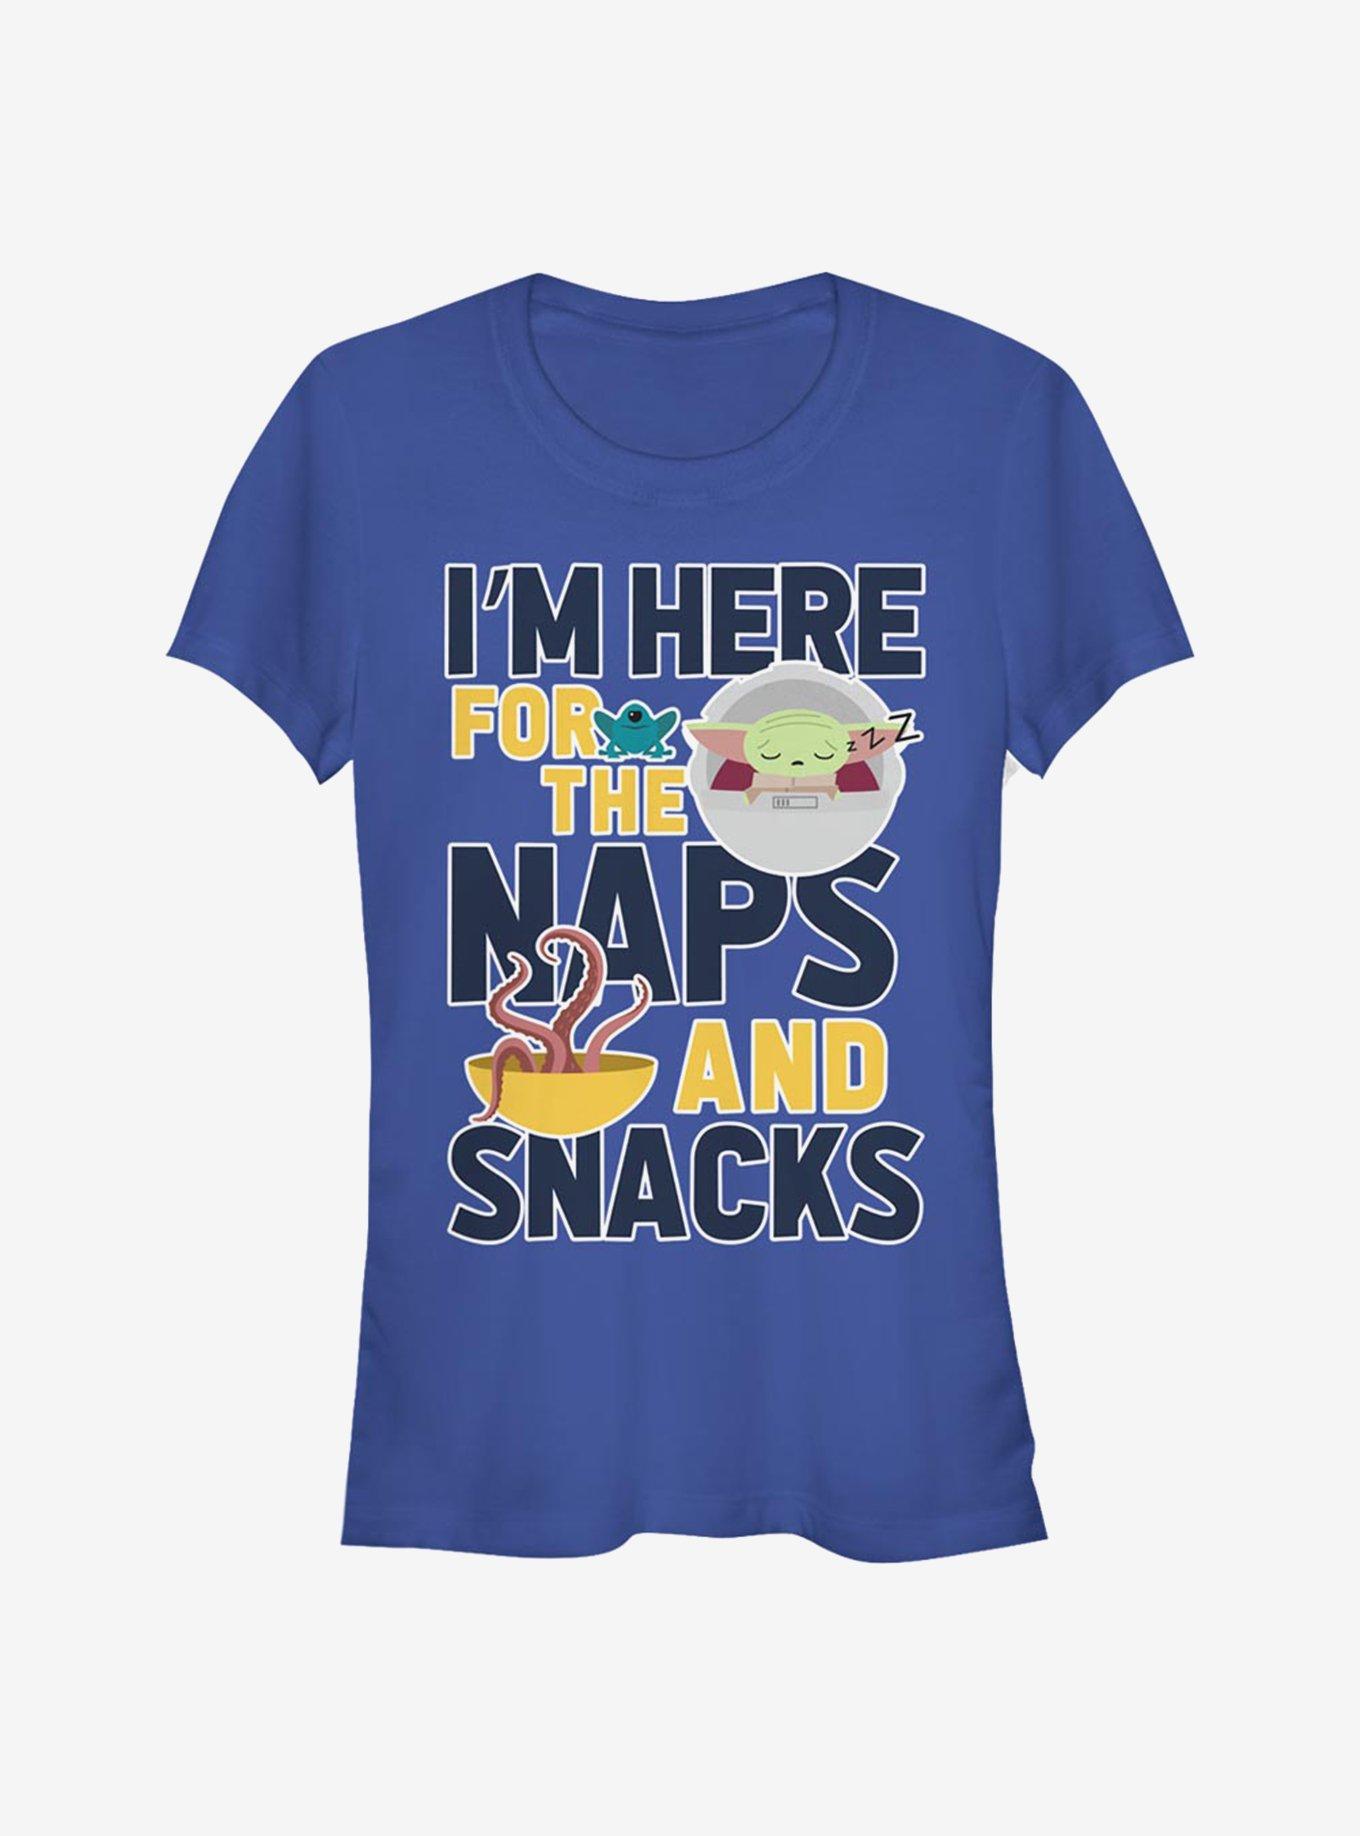 Star Wars The Mandalorian Child Naps And Snacks Girls T-Shirt